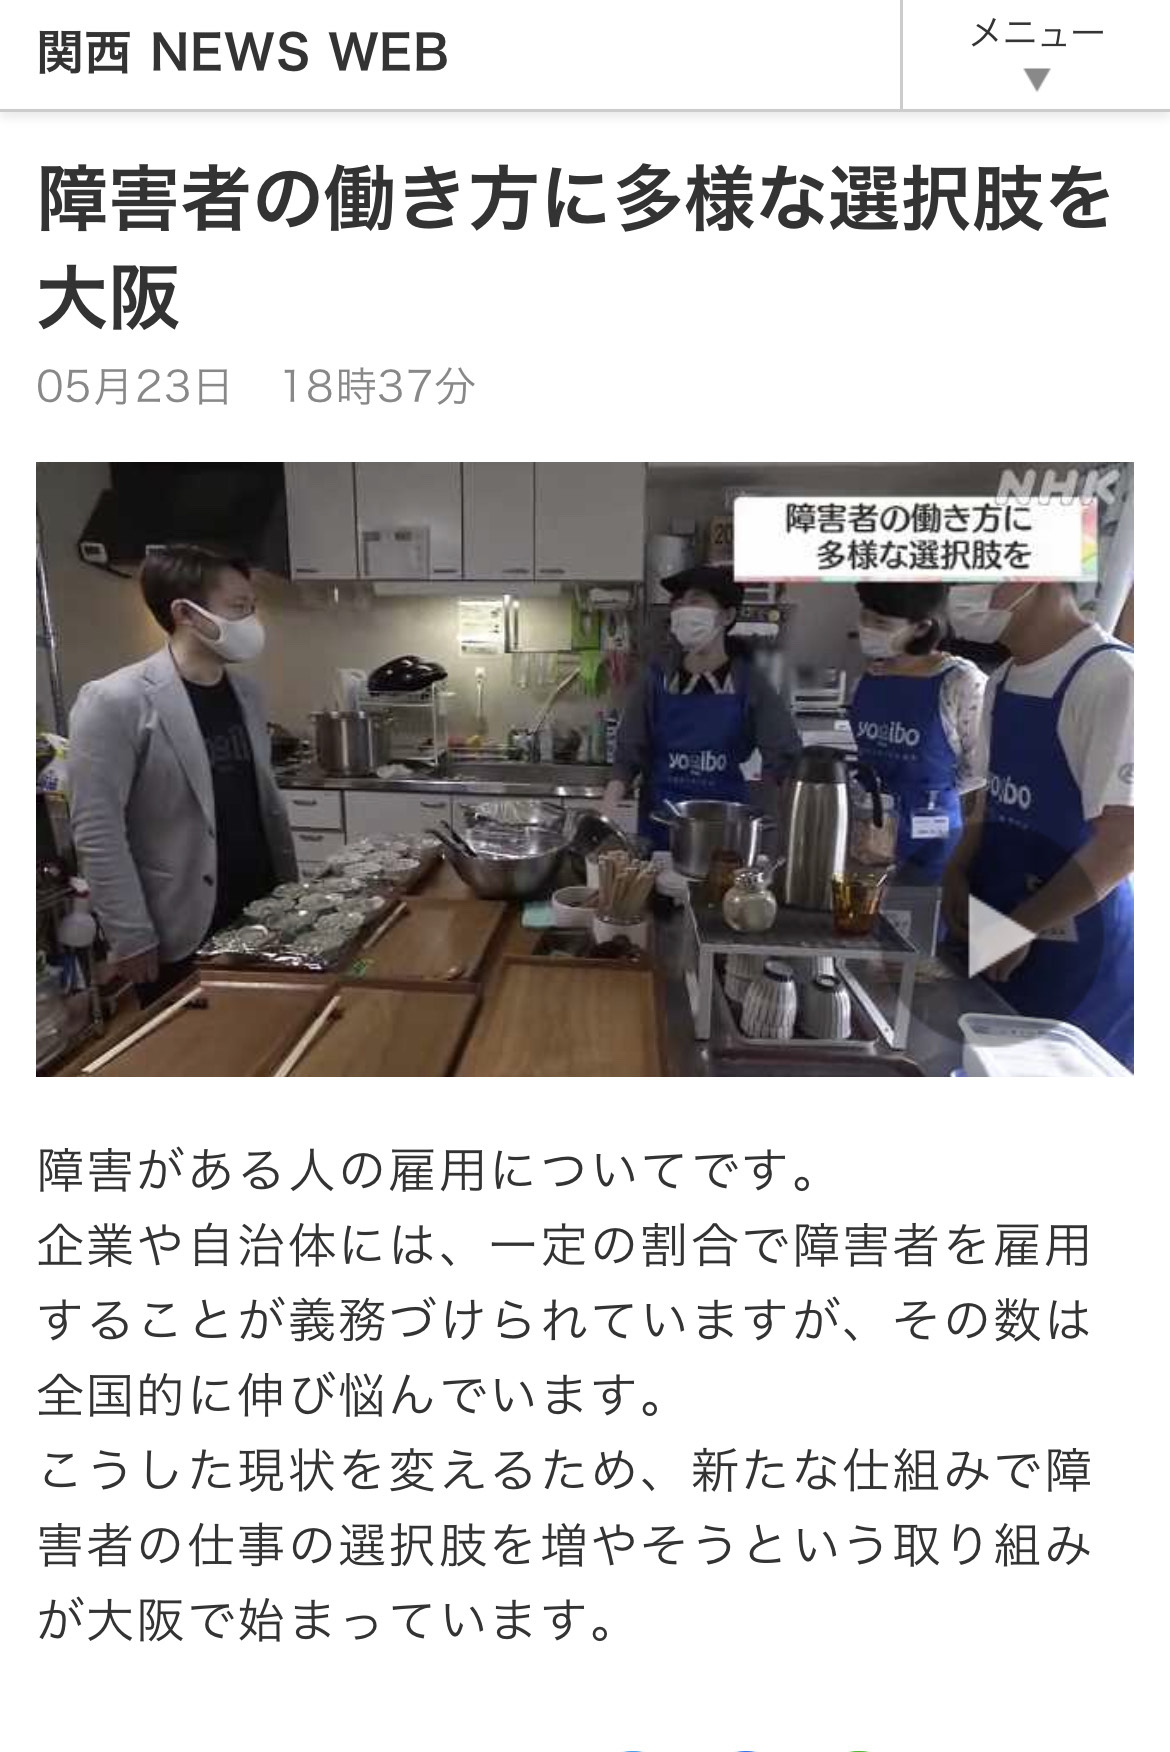 NHK「ほっと関西」、関西全域に放送されました